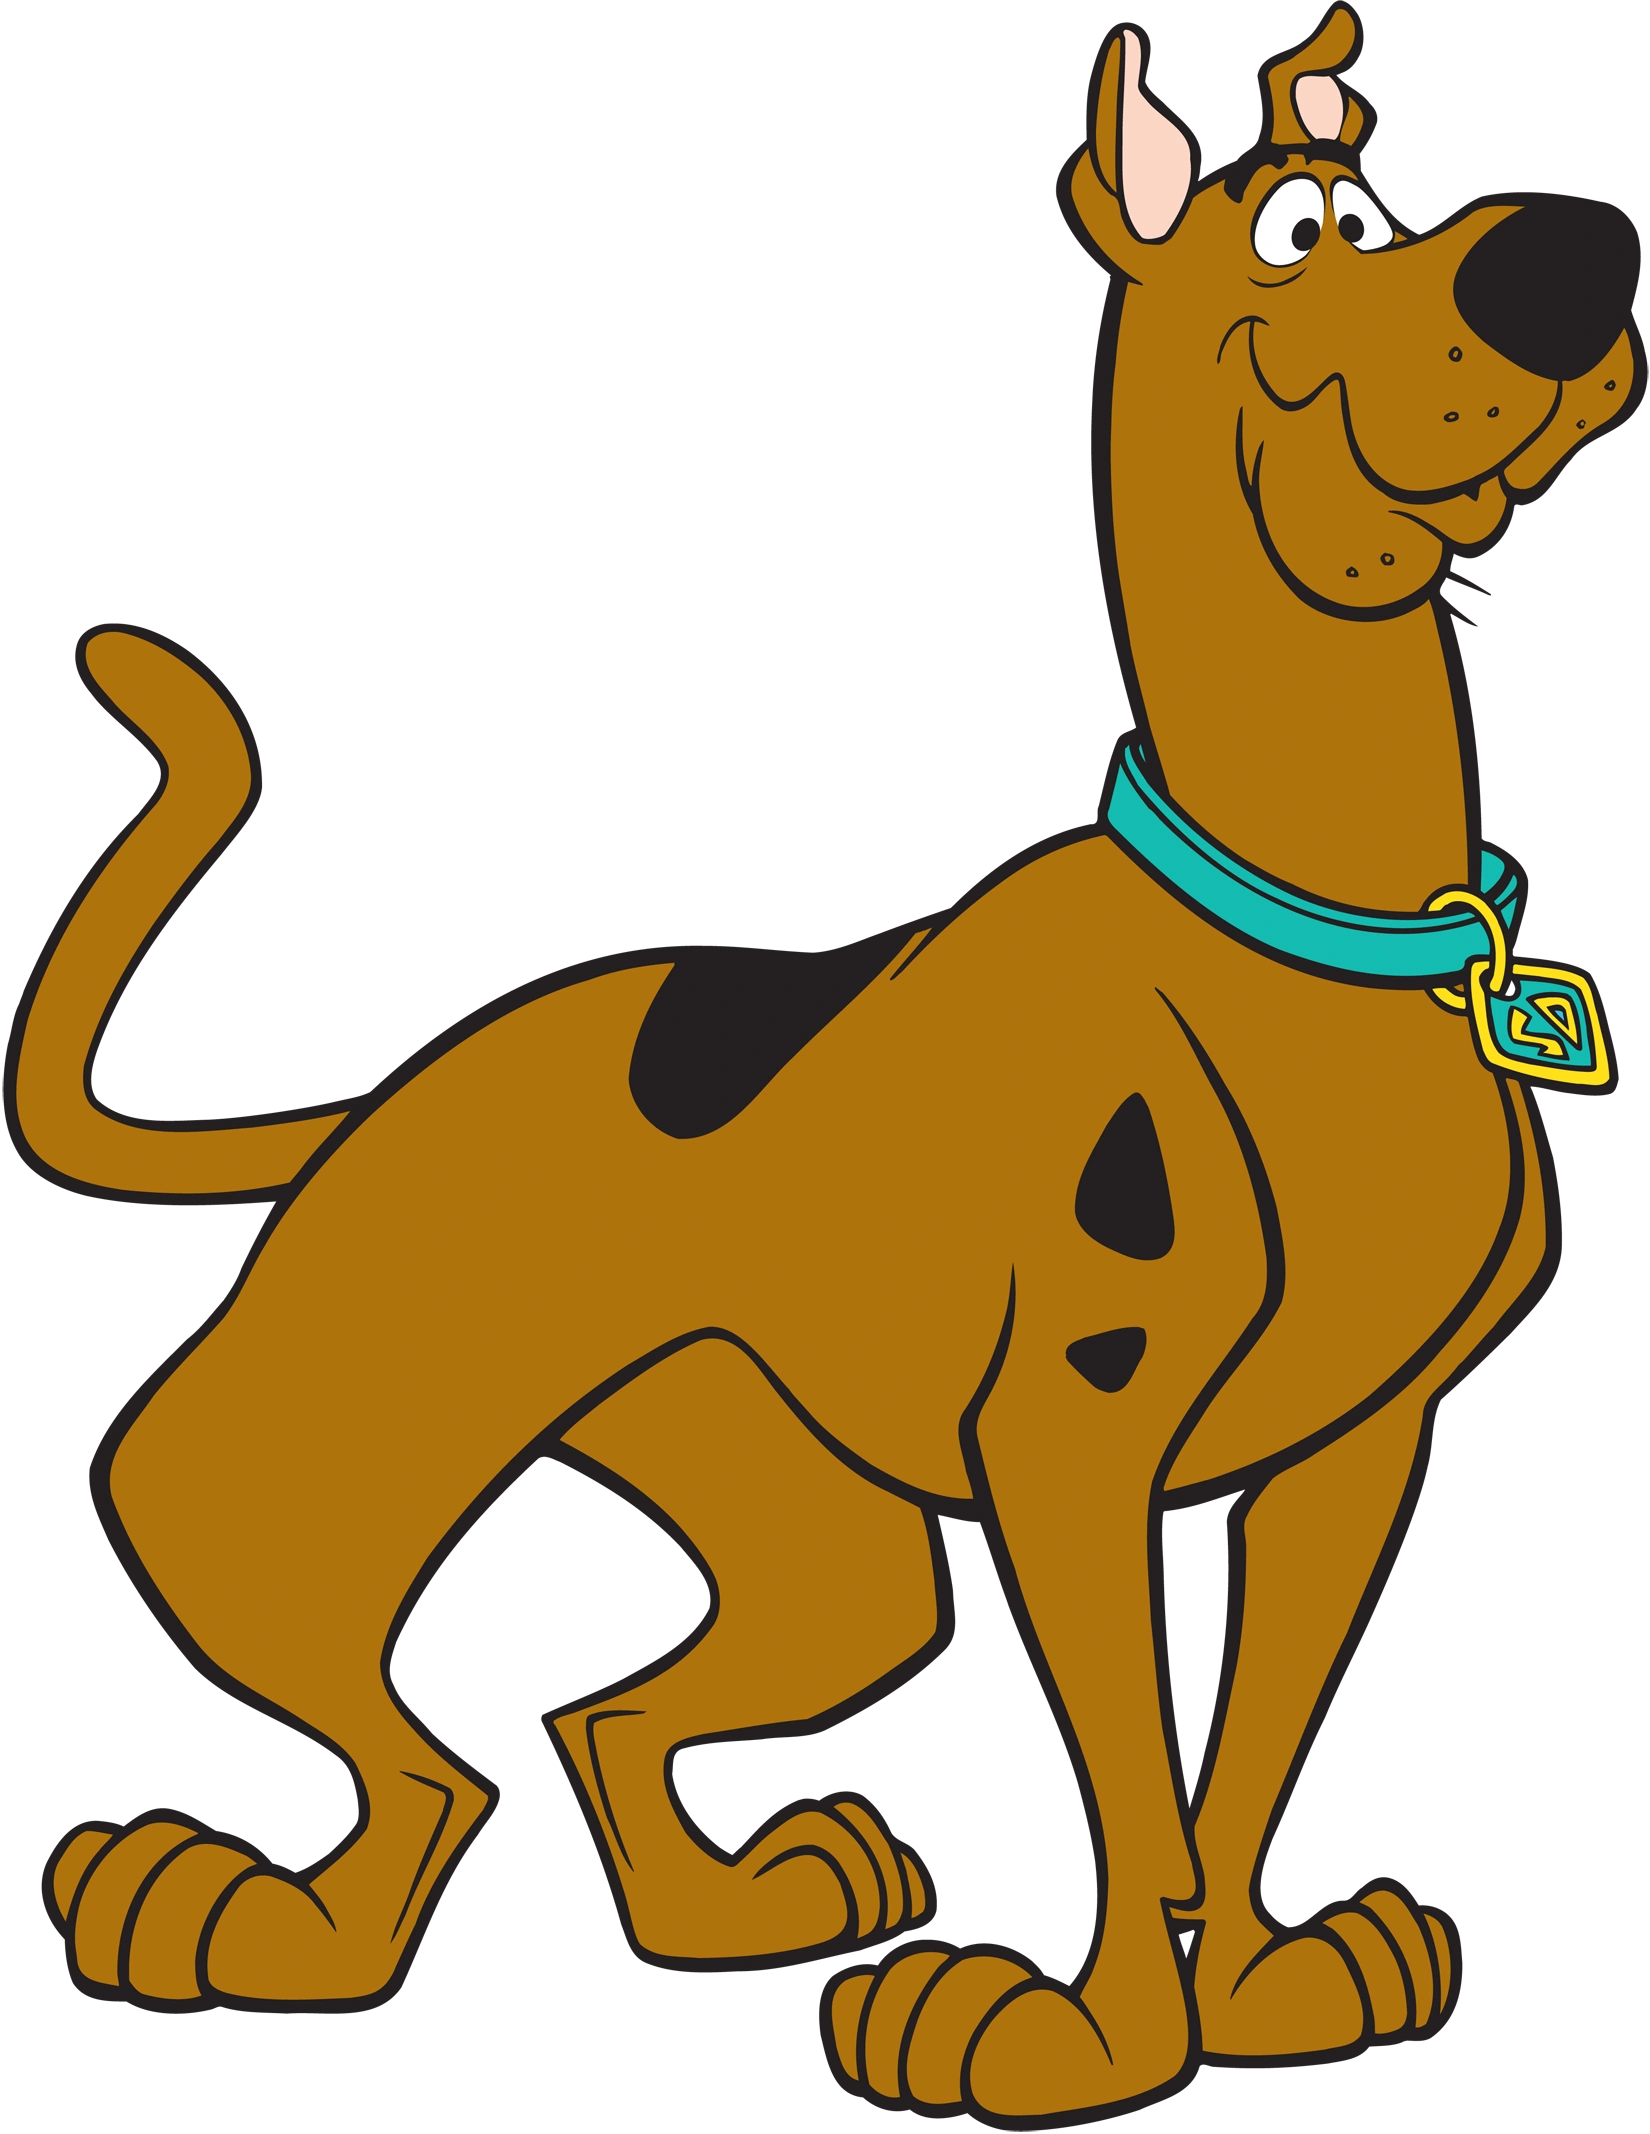 Scooby-Doo. Hanna-Barbera, Warner Bros. Entertainment Inc.